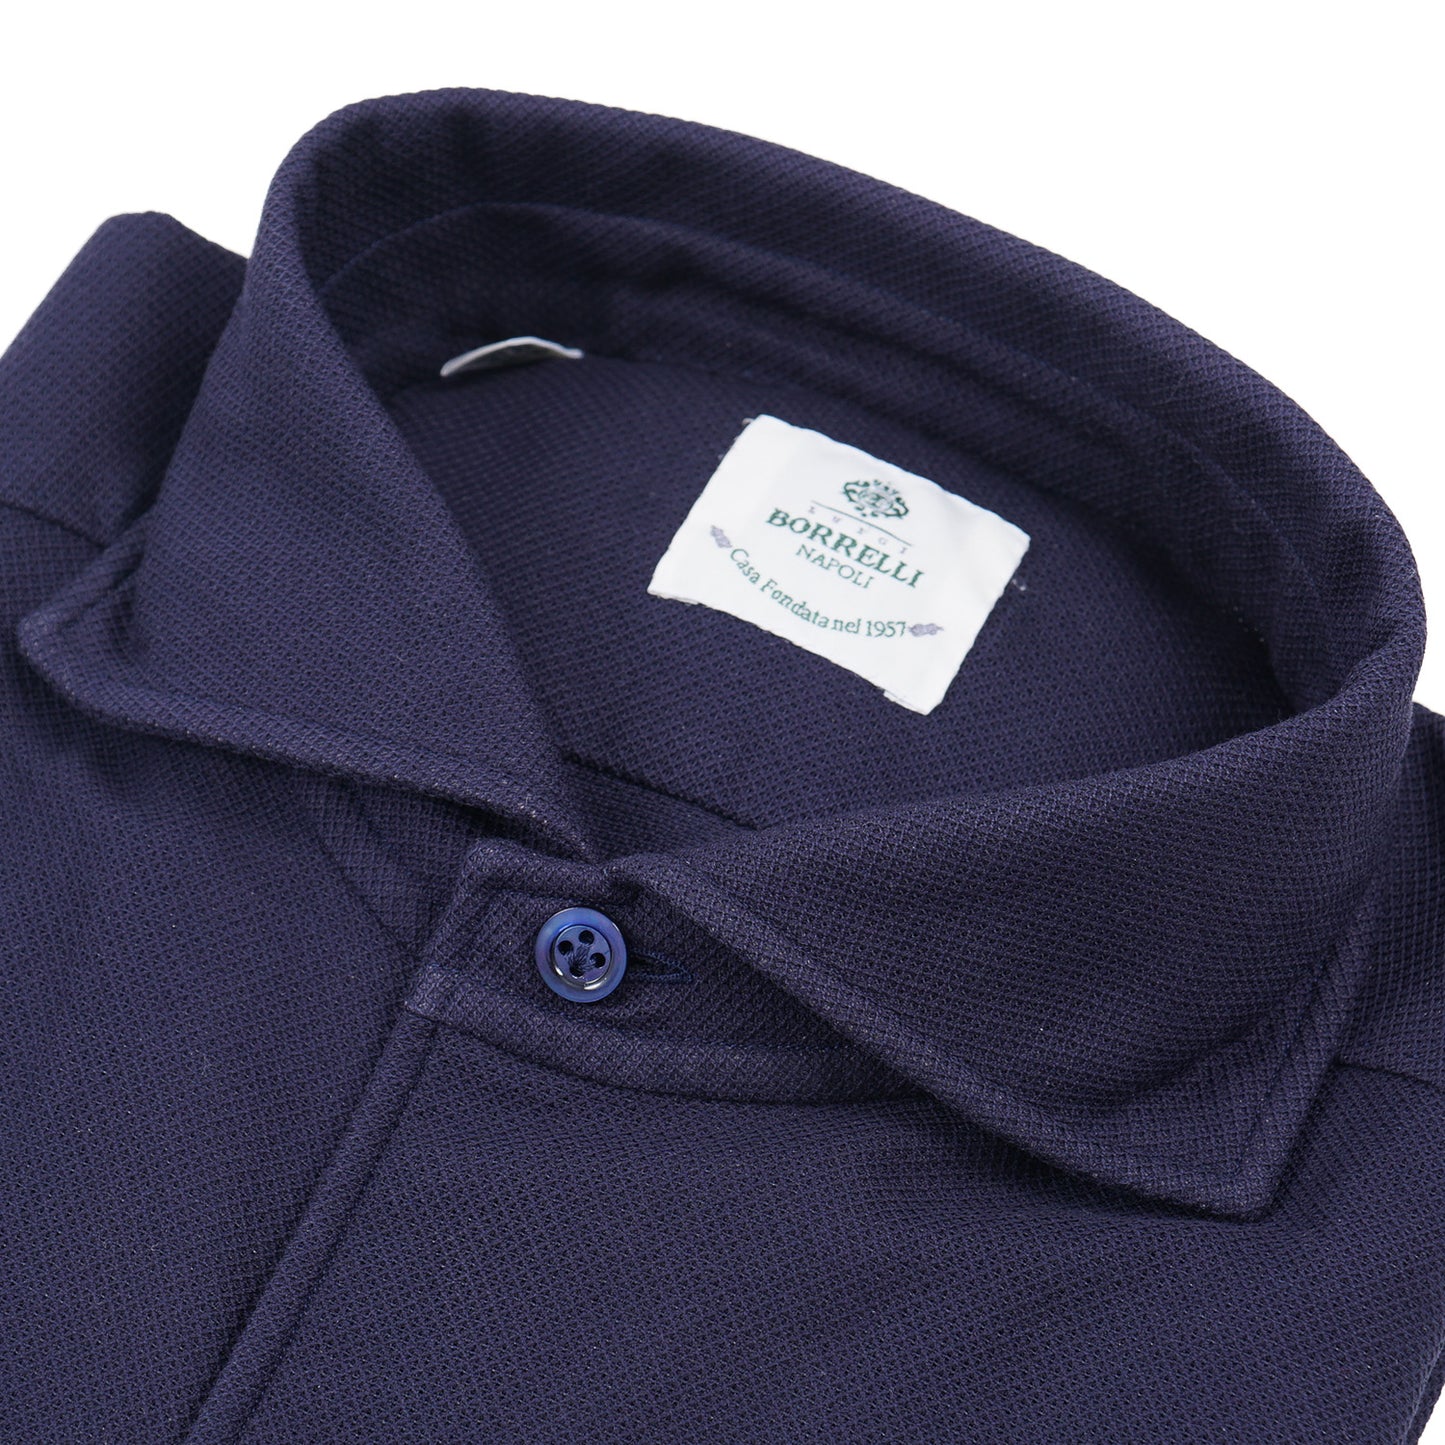 Luigi Borrelli Pique Knit Cotton Shirt - Top Shelf Apparel